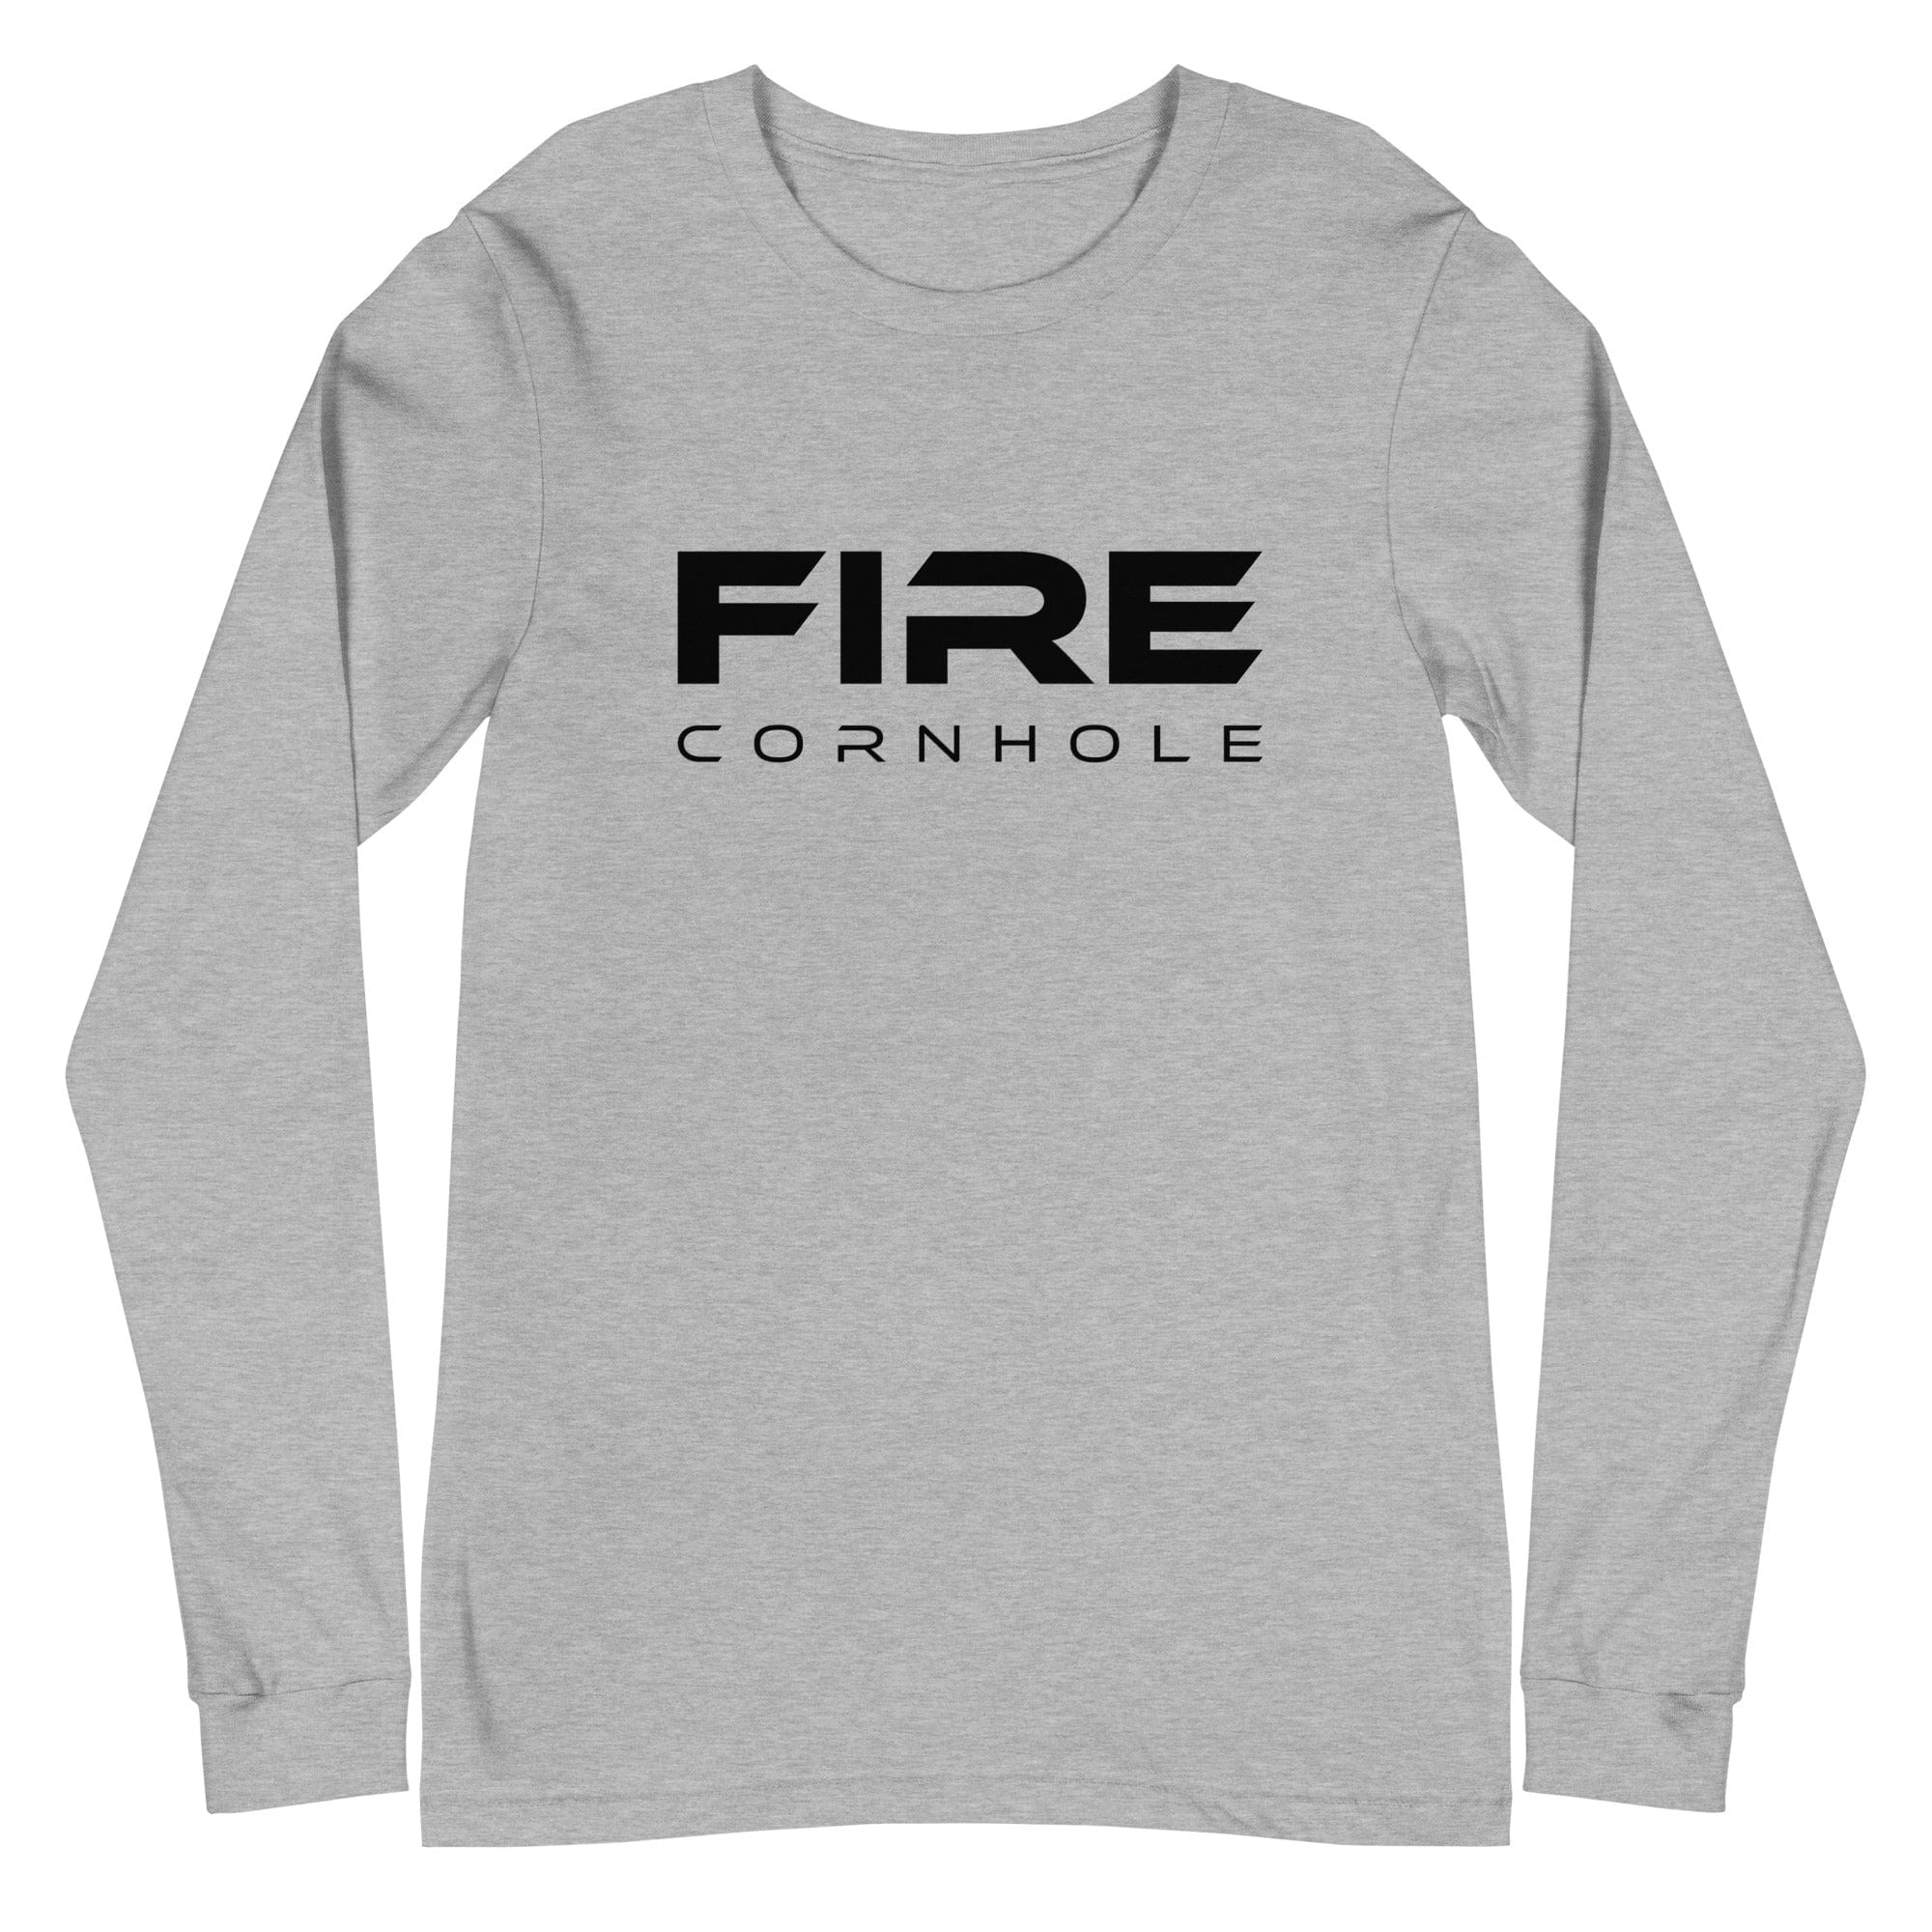 Heathered grey unisex cotton longsleeve shirt with Fire Cornhole logo in black